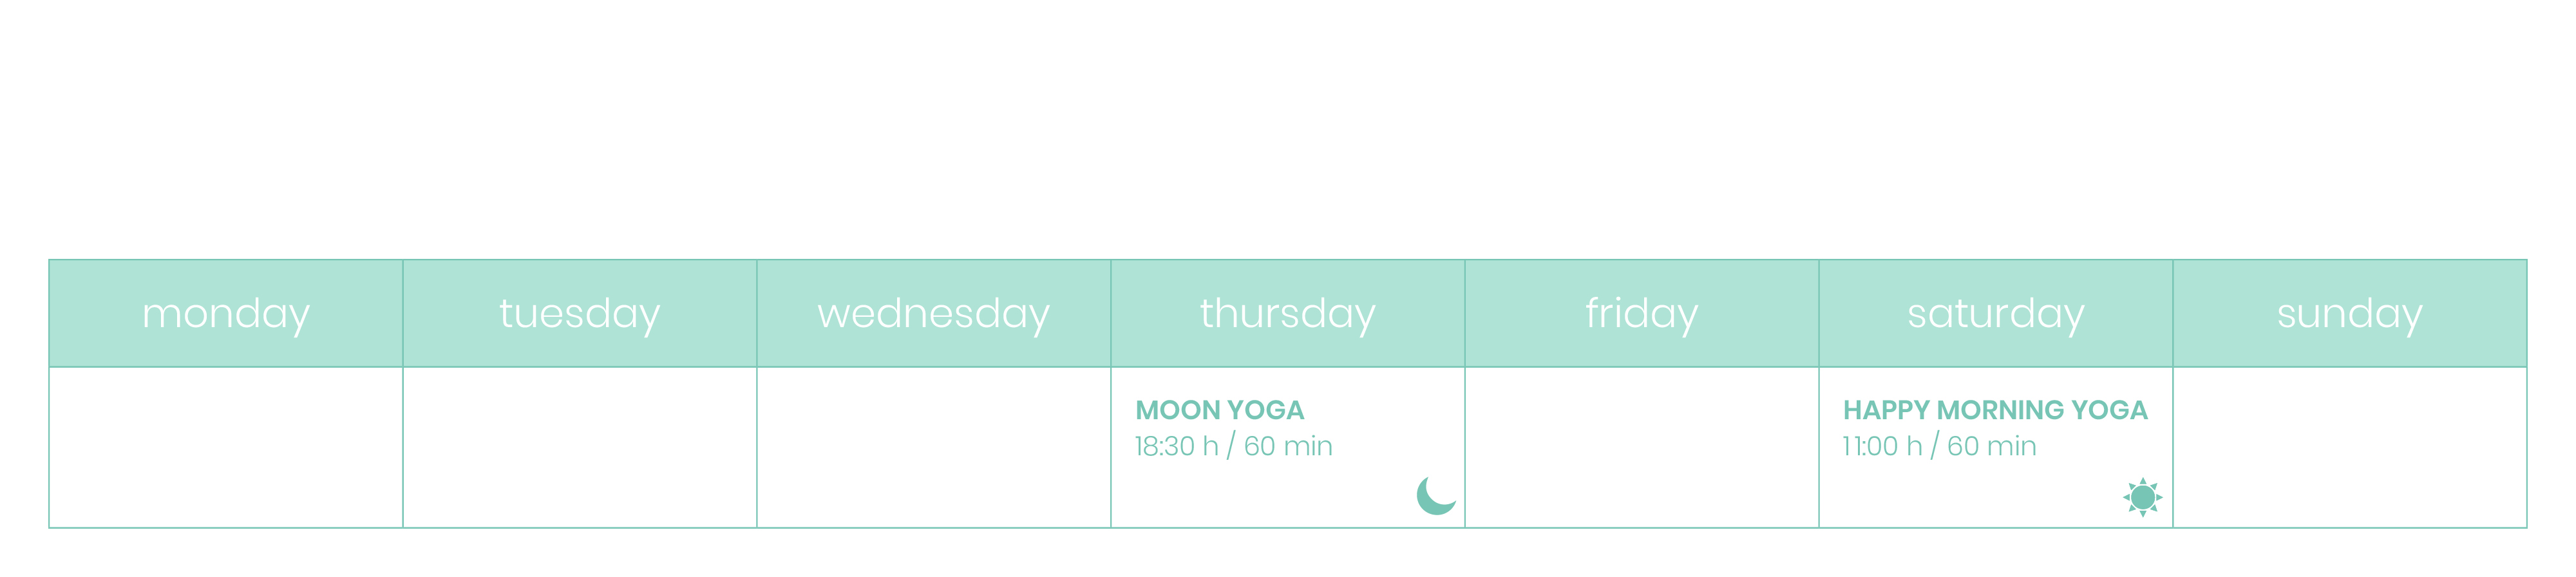 alia yoga schedule